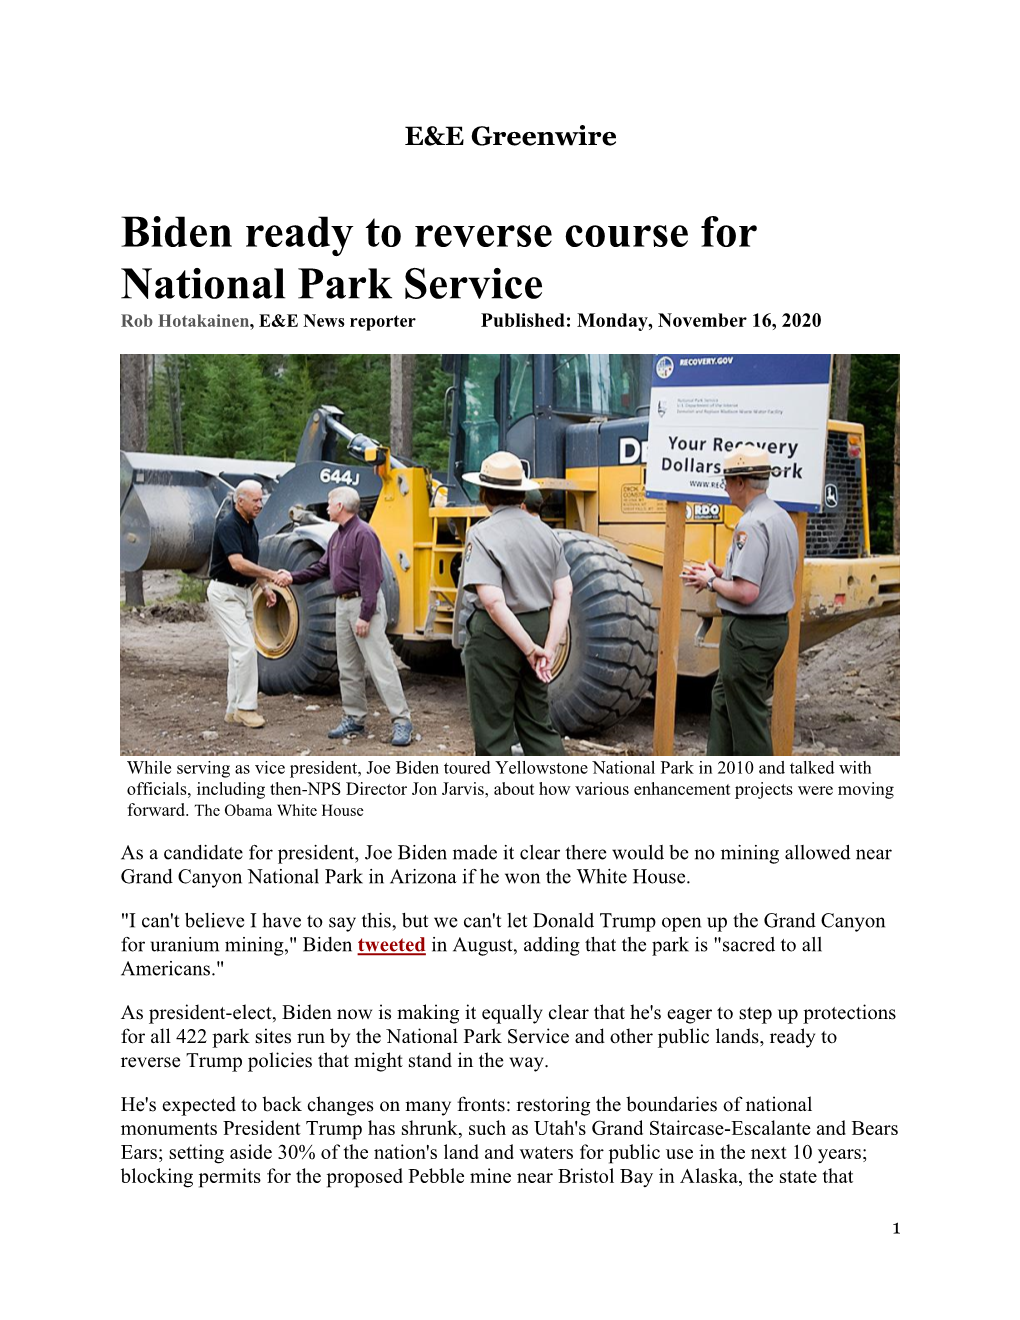 Biden Ready to Reverse Course for National Park Service Rob Hotakainen, E&E News Reporter Published: Monday, November 16, 2020